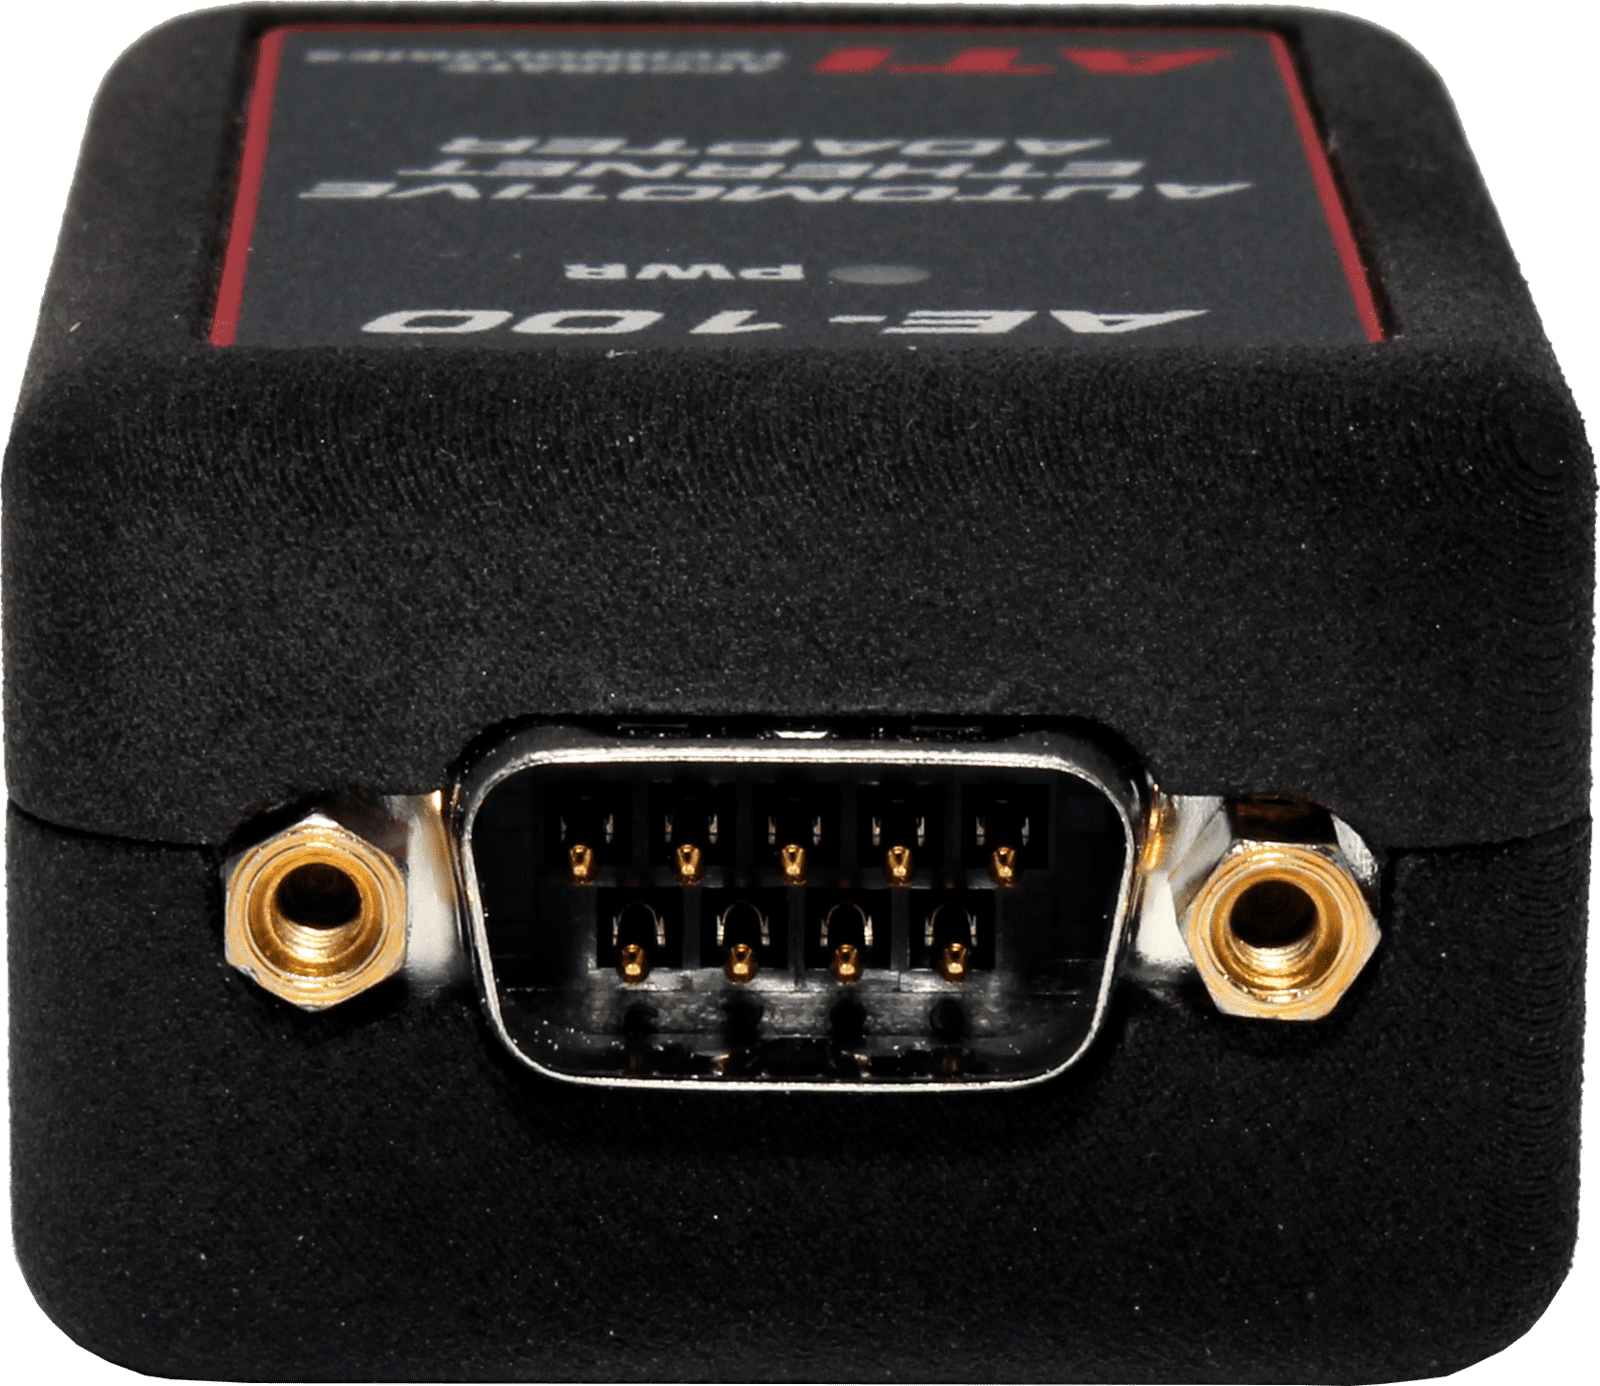 AE-100 Automotive Ethernet Adapter 